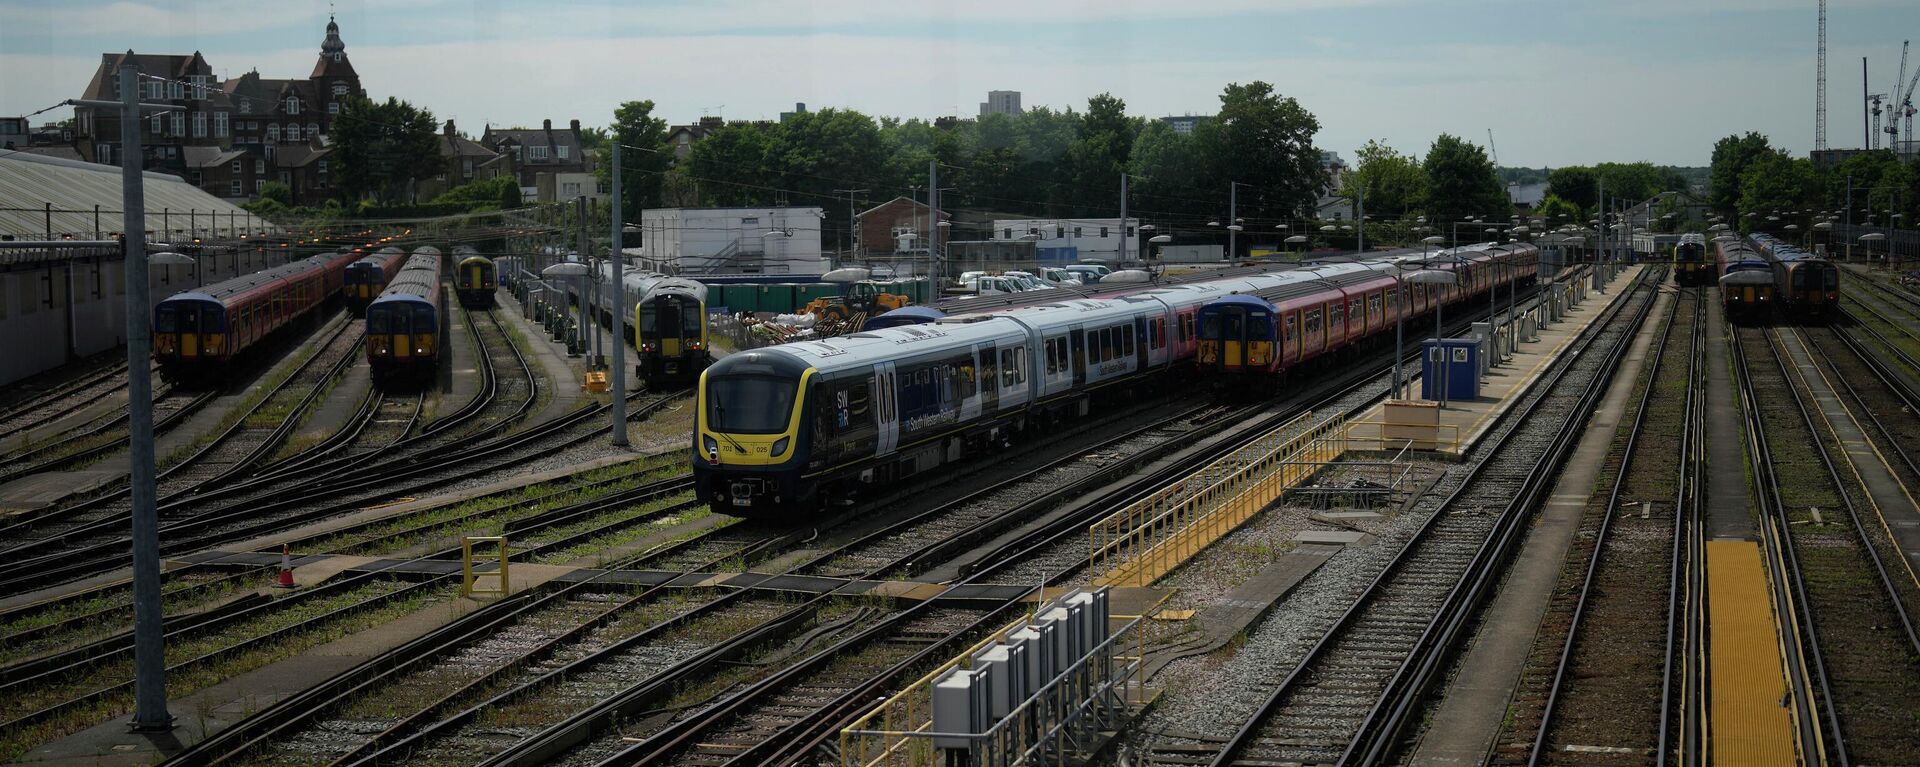 Trains parked at Clapham Junction railway station, in London, Tuesday, June 21, 2022 - Sputnik International, 1920, 23.06.2022